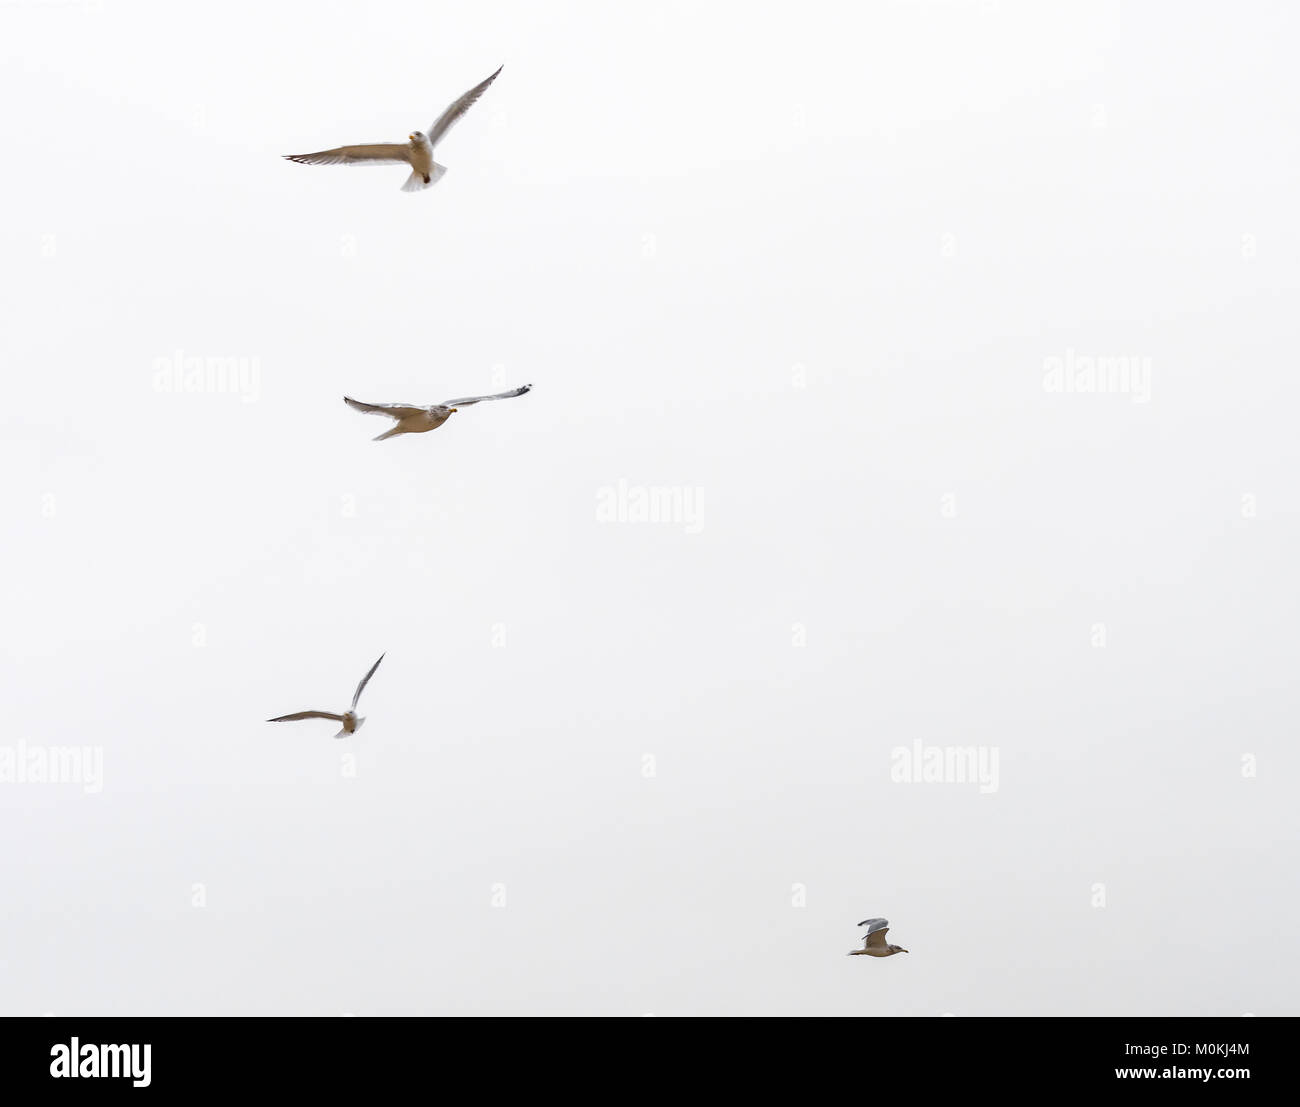 Les mouettes en vol contre un ciel d'hiver blanc Banque D'Images